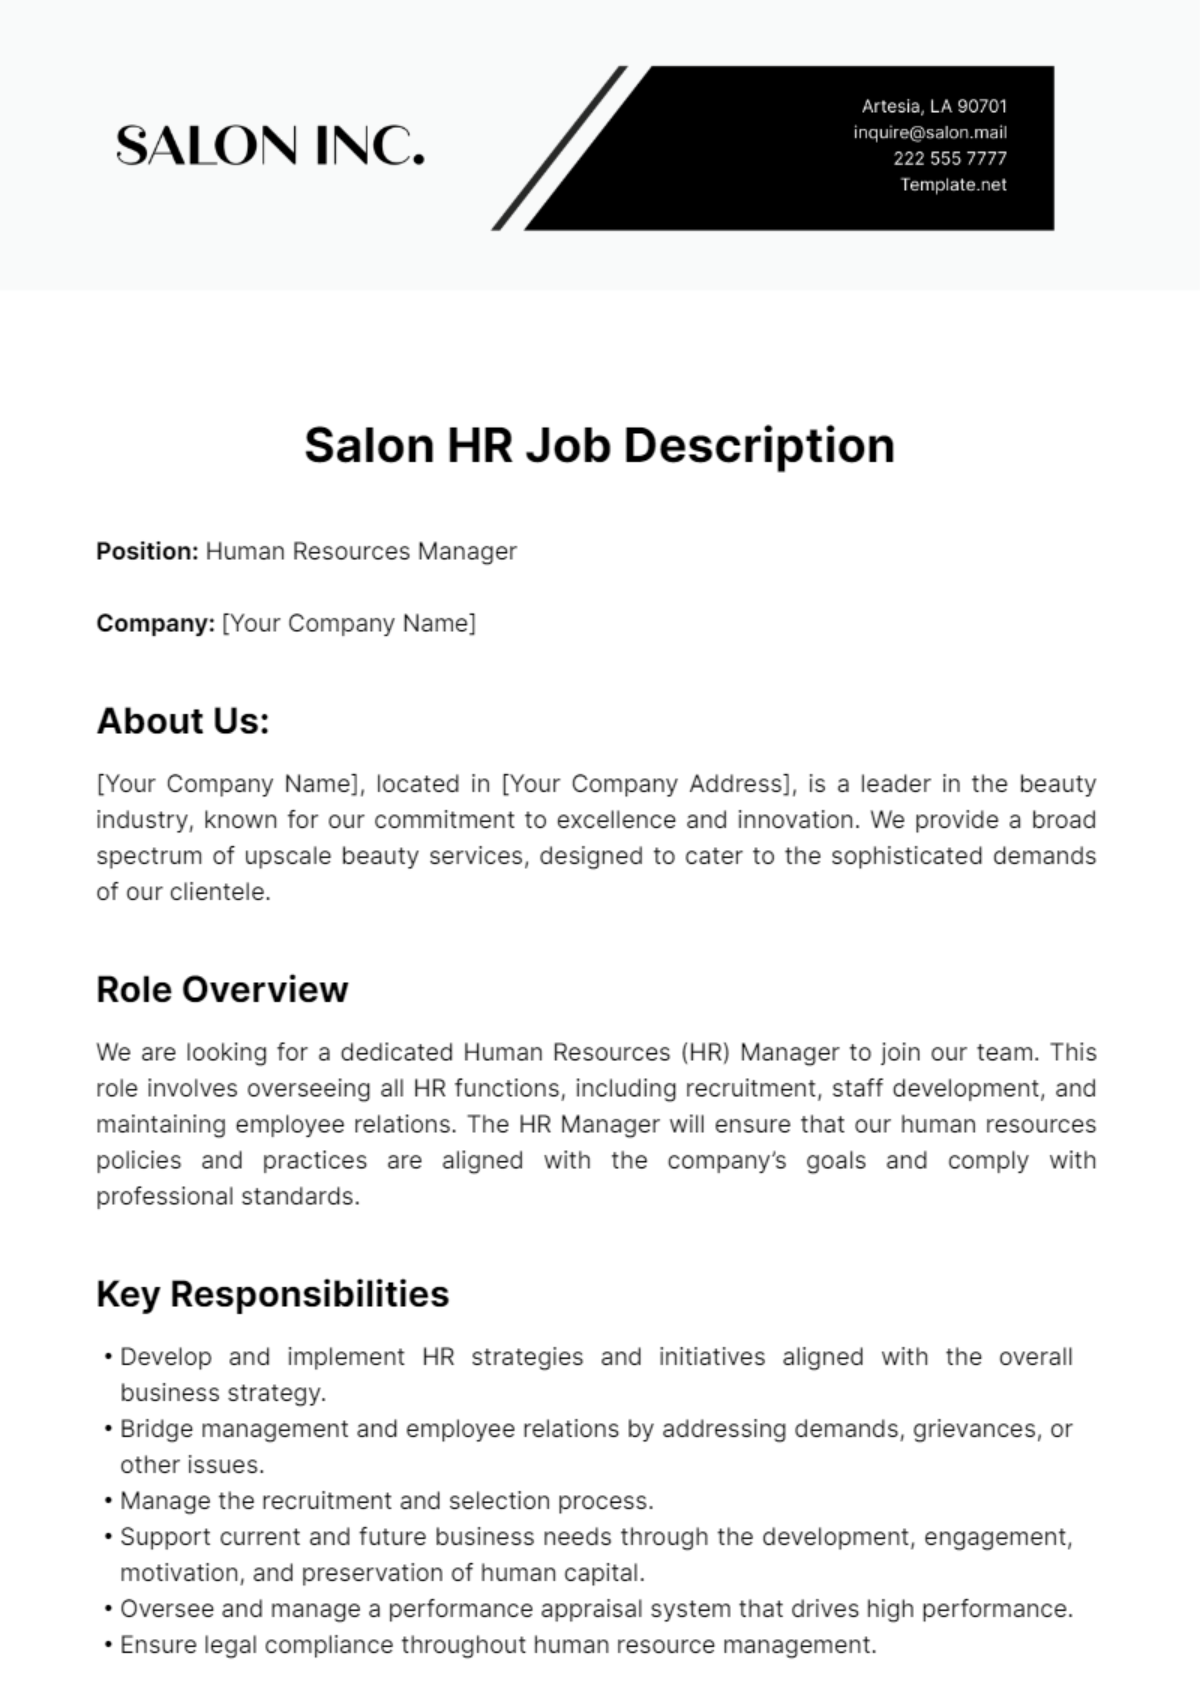 Salon HR Job Description Template